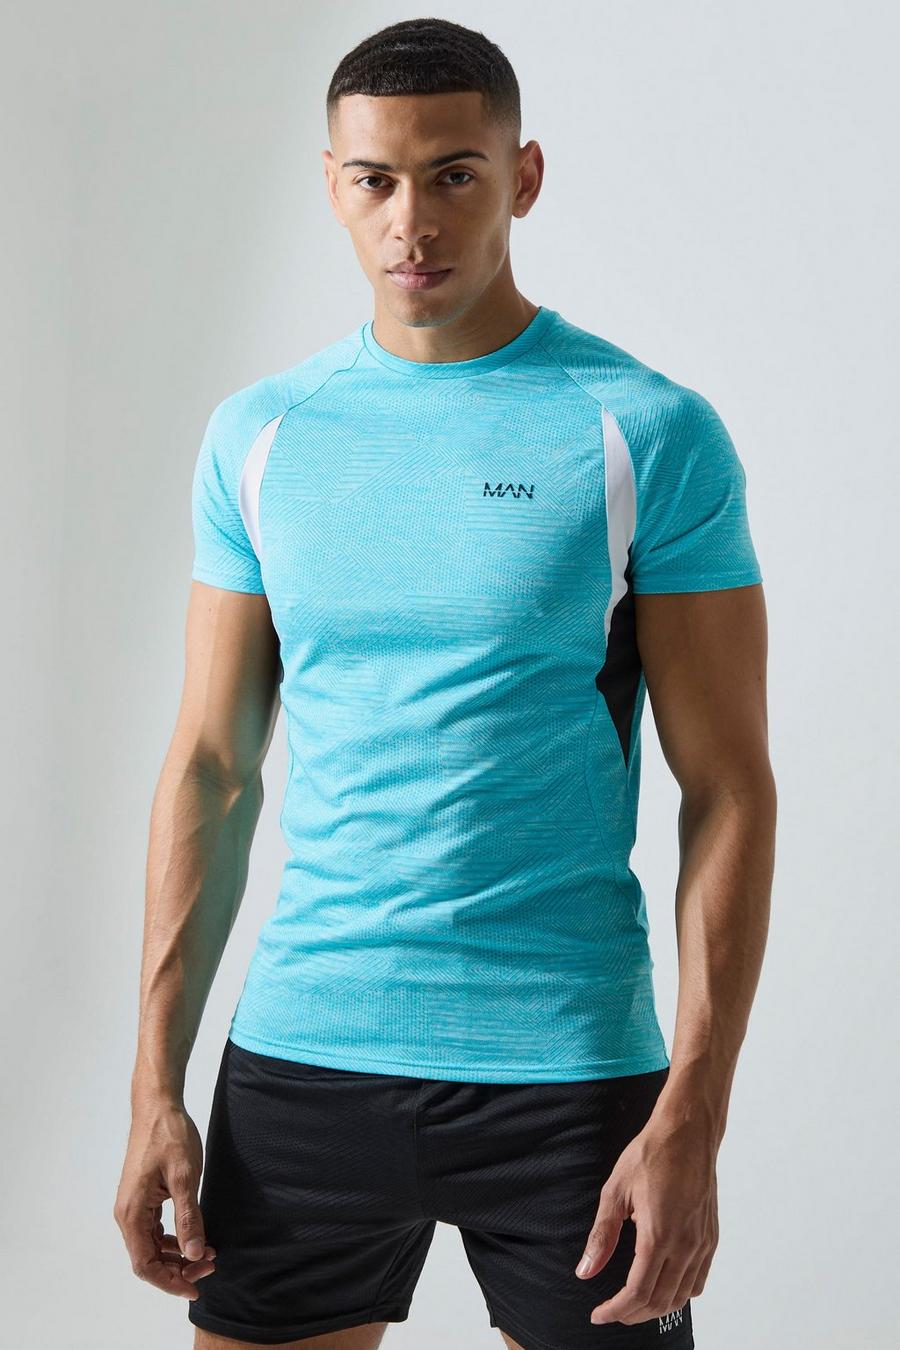 Man Active Jacquard Muscle-Fit T-Shirt, Aqua